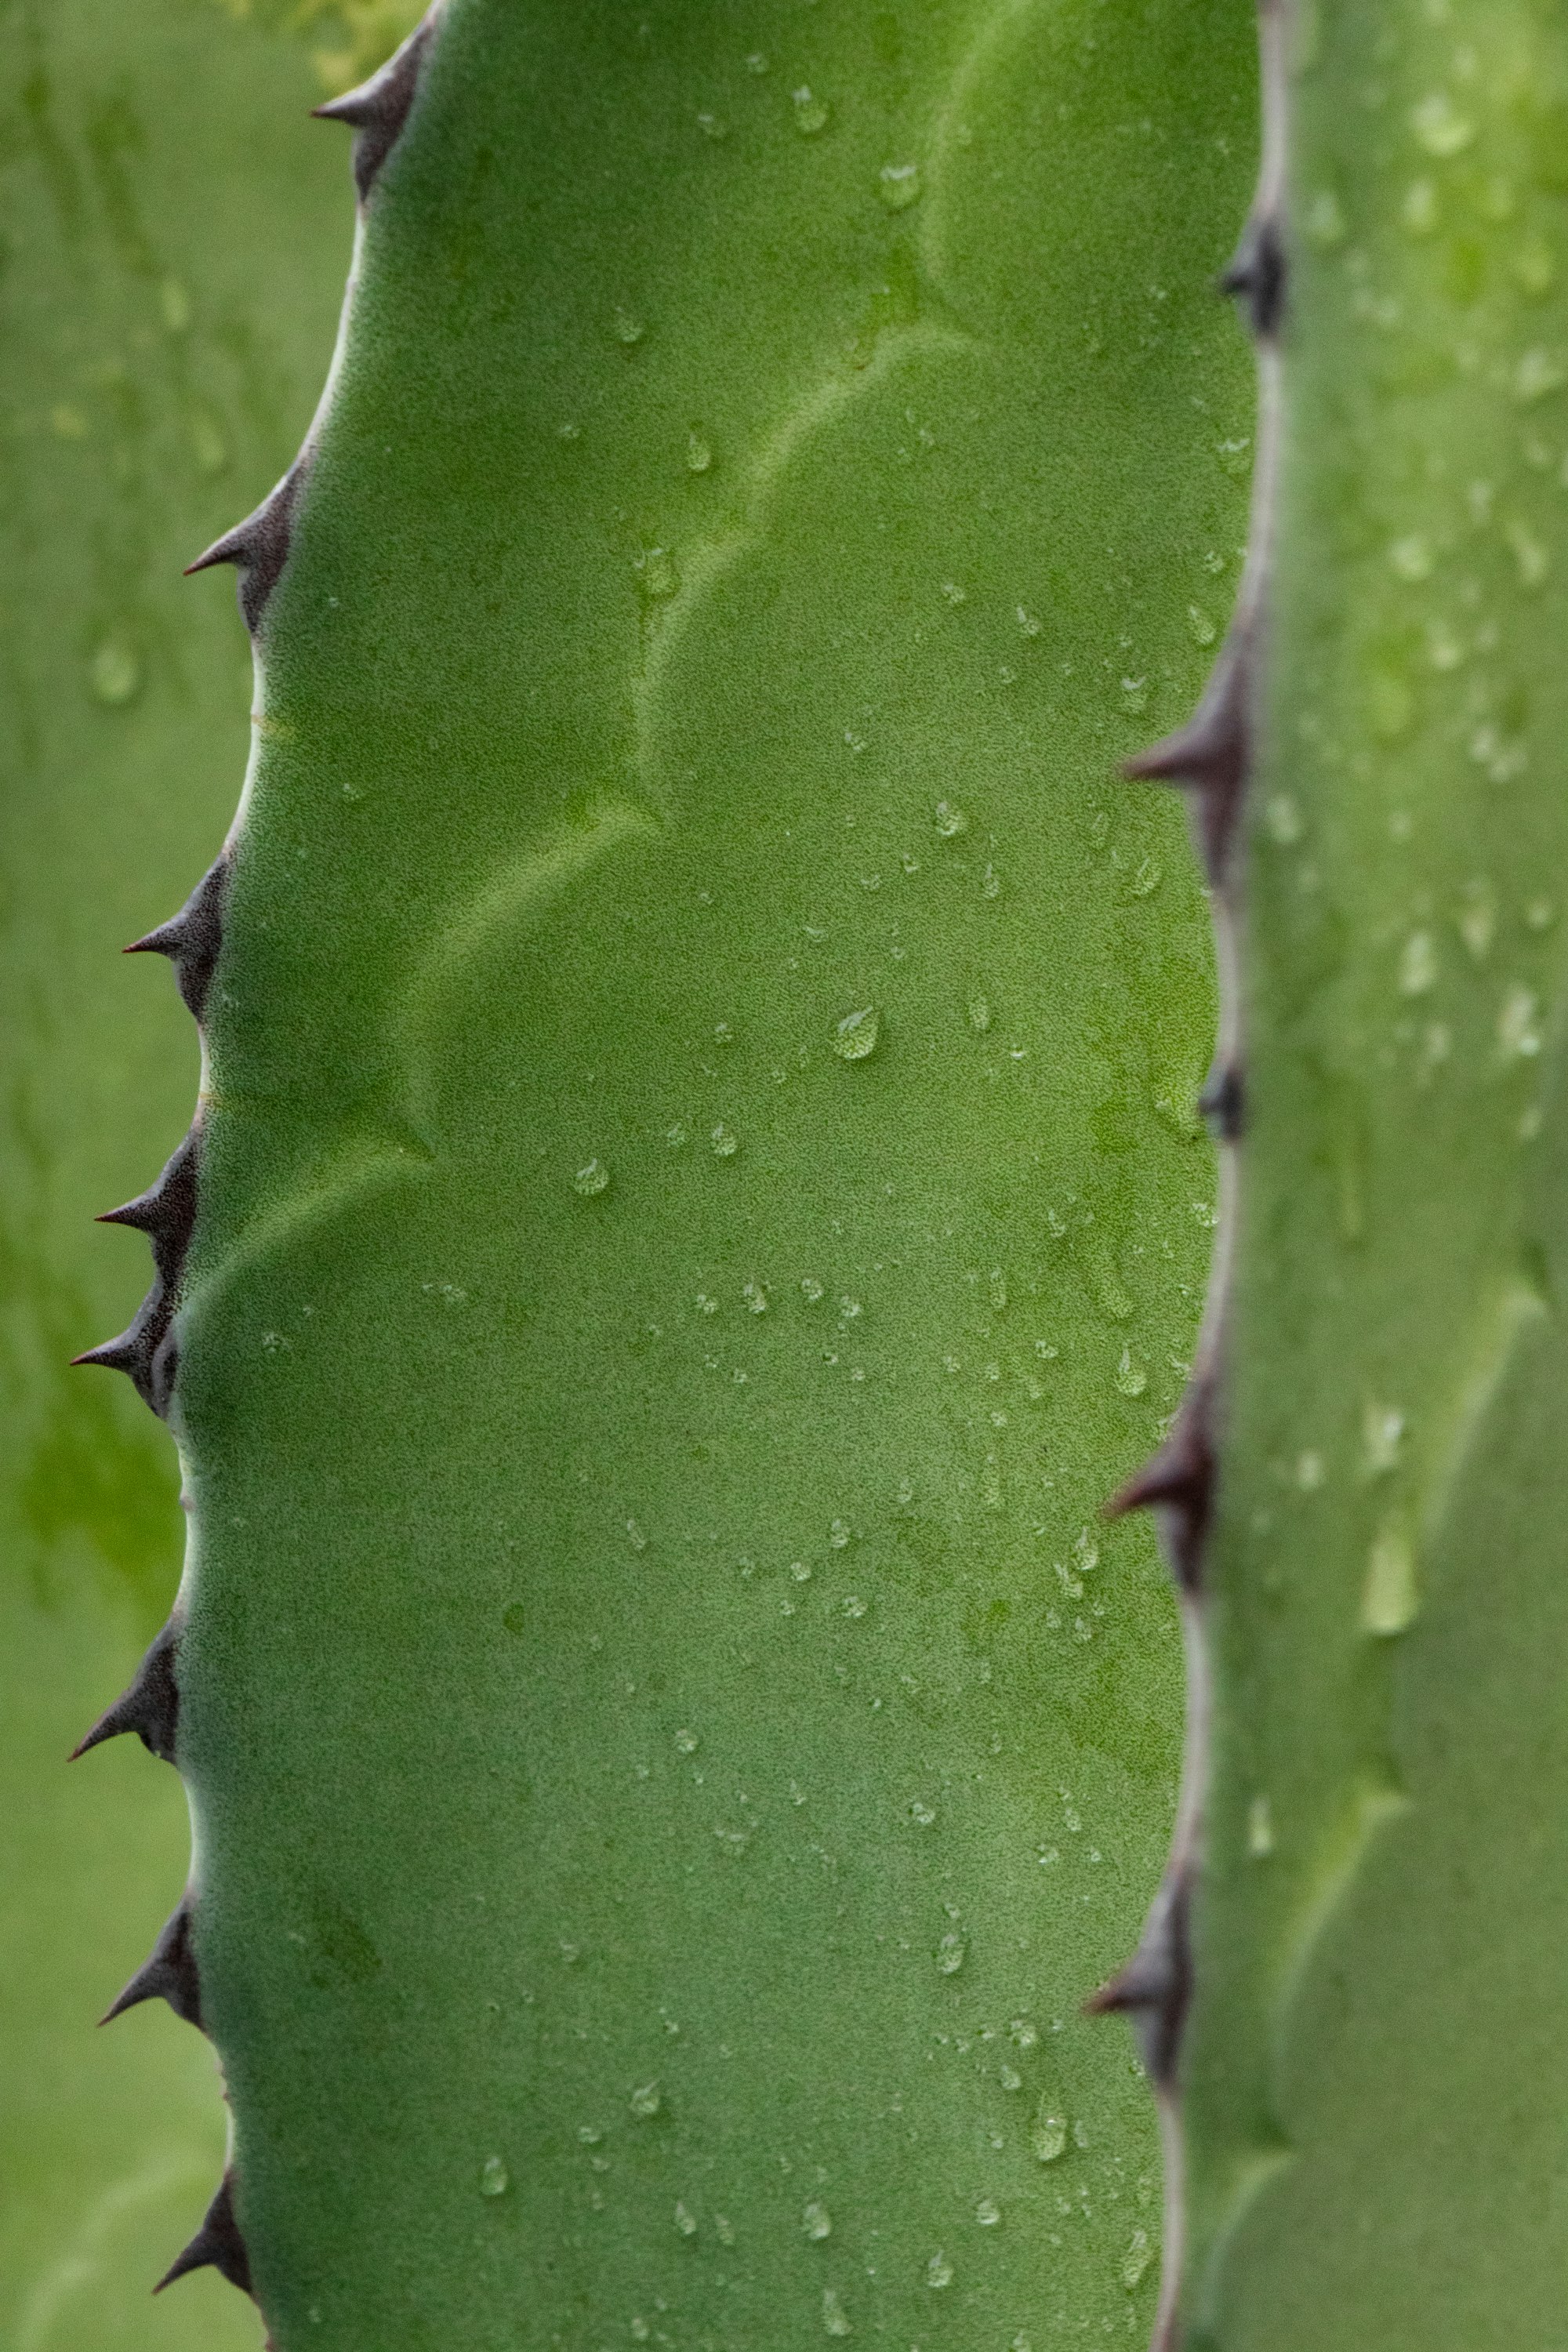 Cactus after raining, Royal Botanic Gardens Melbourne